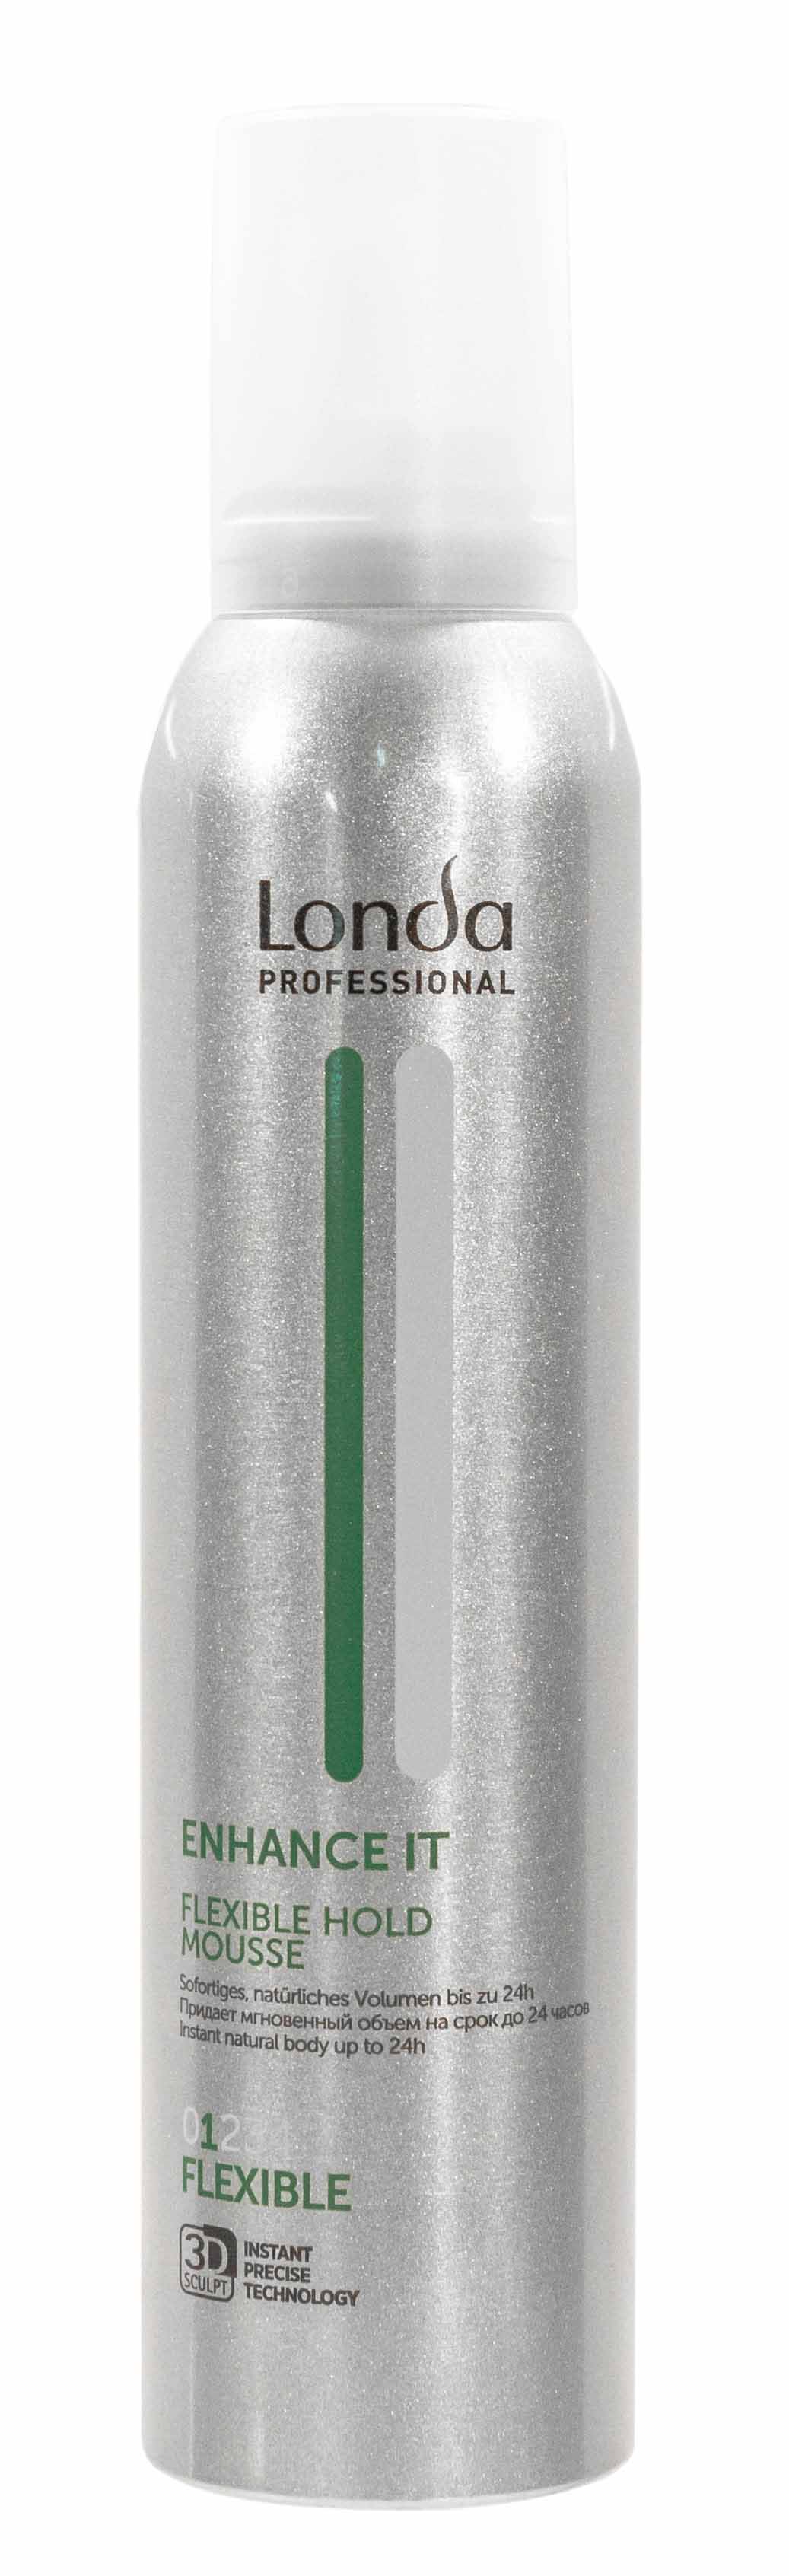 Londa Professional Пена Enhance It  для укладки волос нормальной фиксации, 250 мл. фото